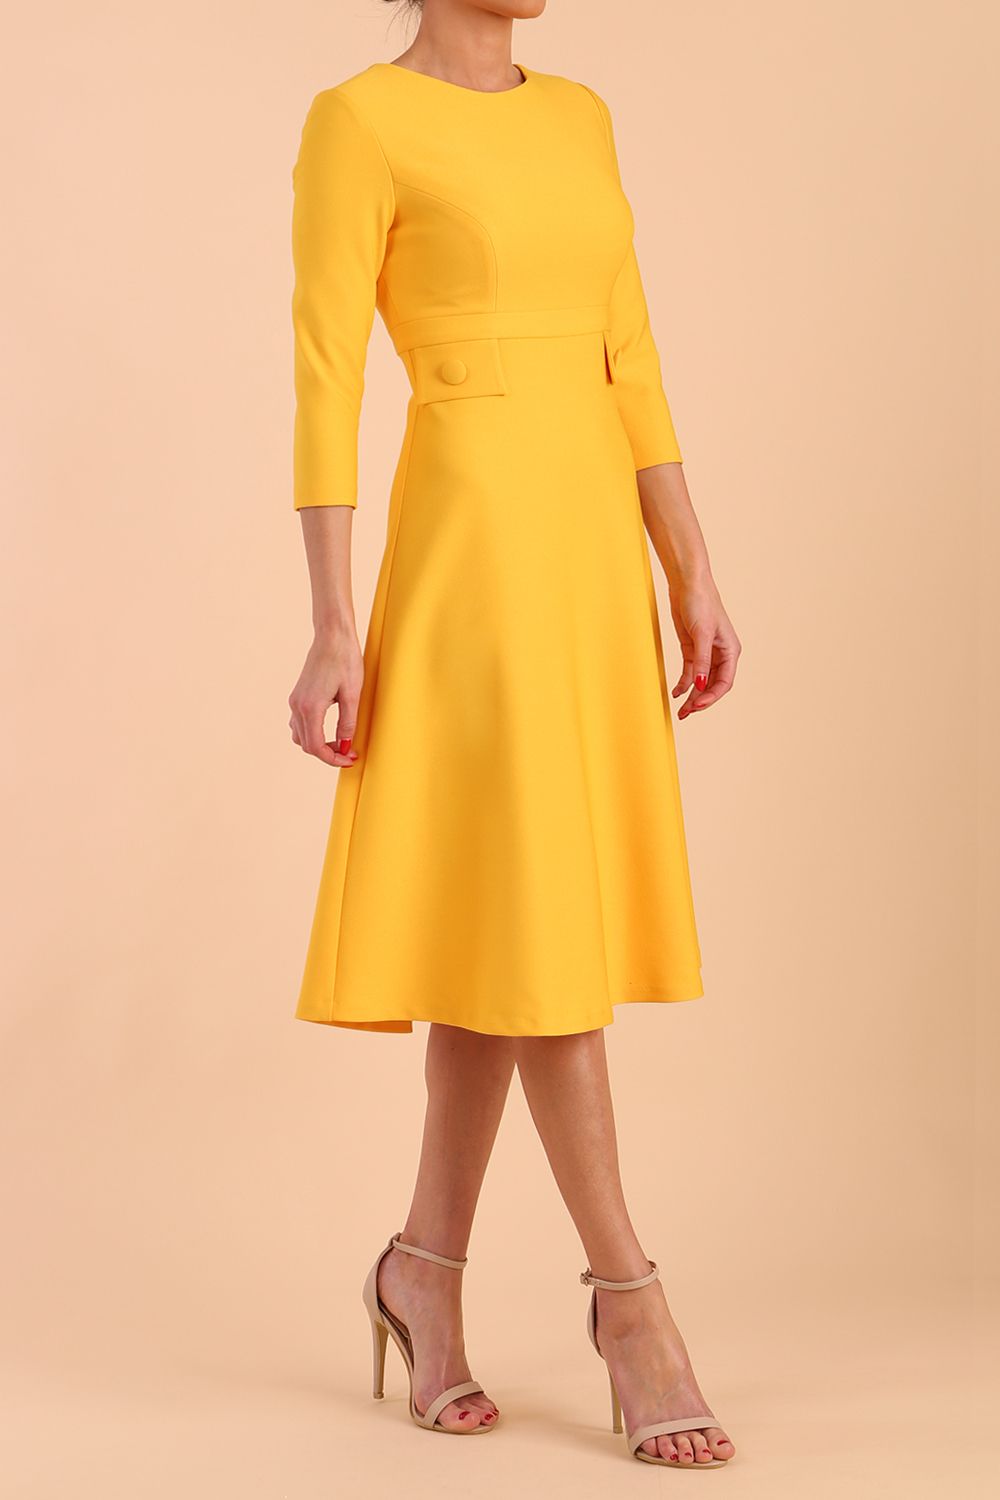 Model wearing diva catwalk Gresham 3/4 Sleeve Knee Length A-Line Dress in Daffodil Yellow side